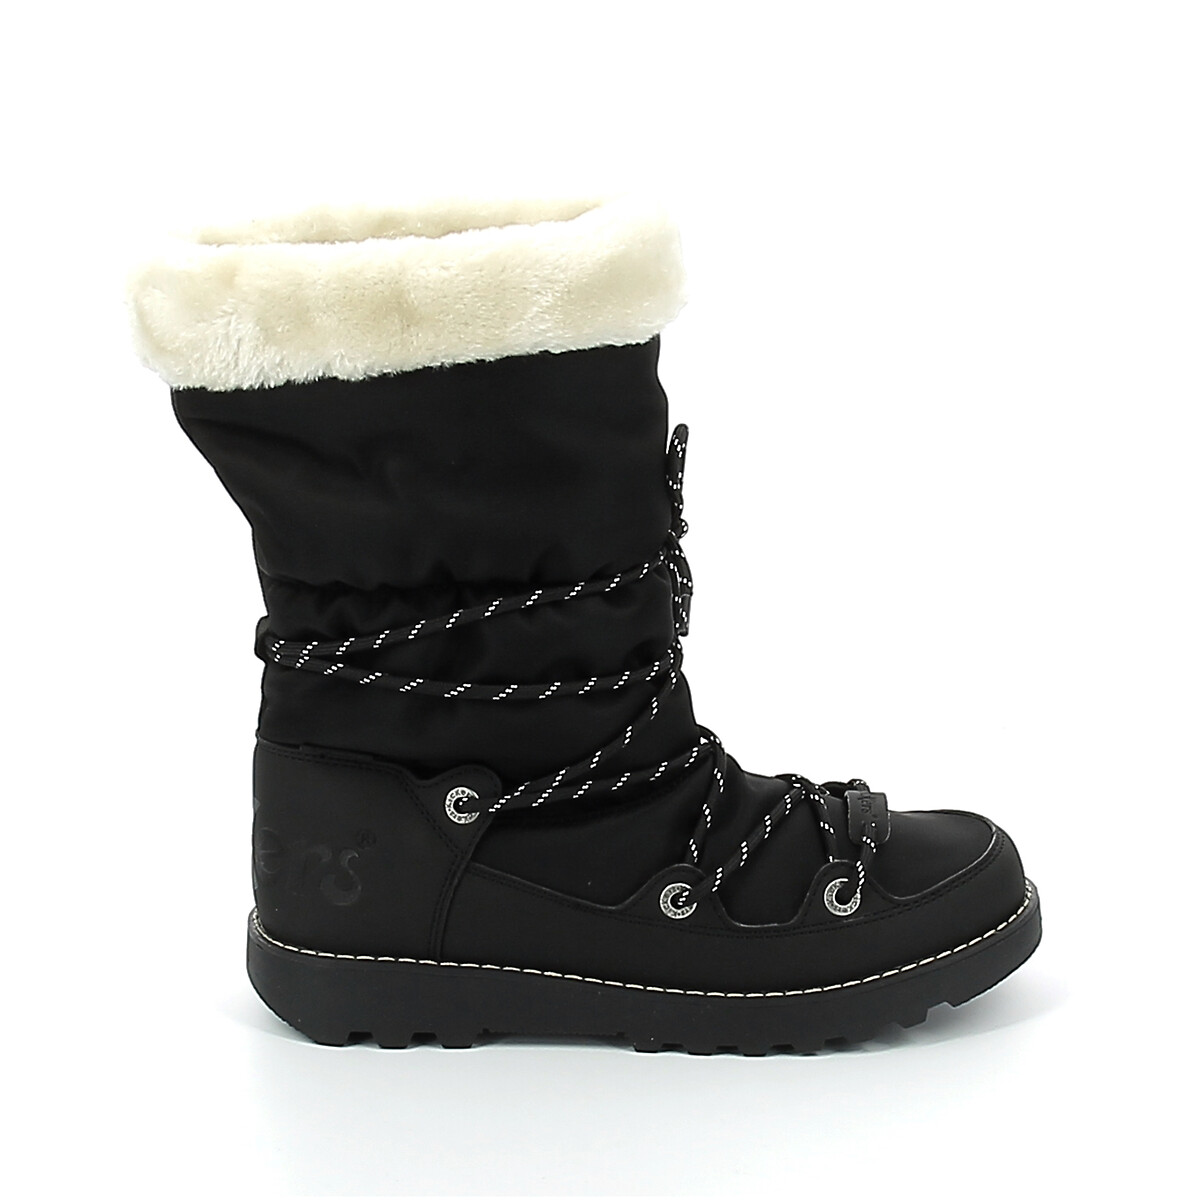 Kick Neosnow Apres-Ski Ankle Boots in Leather